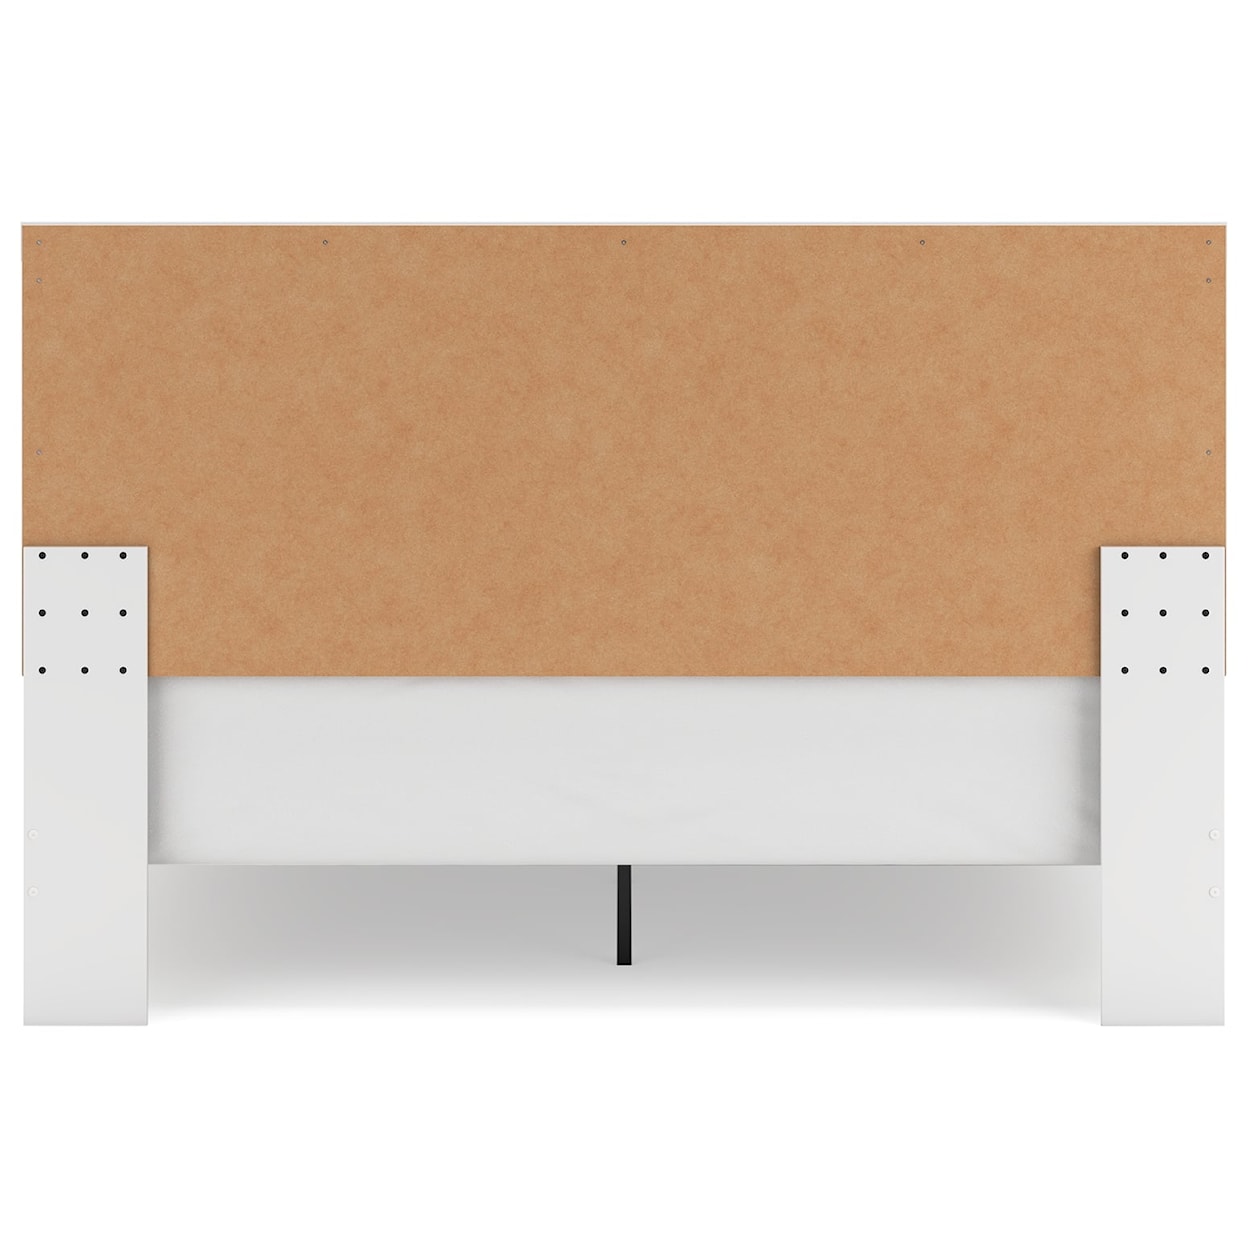 Ashley Furniture Signature Design Charbitt King Panel Bed